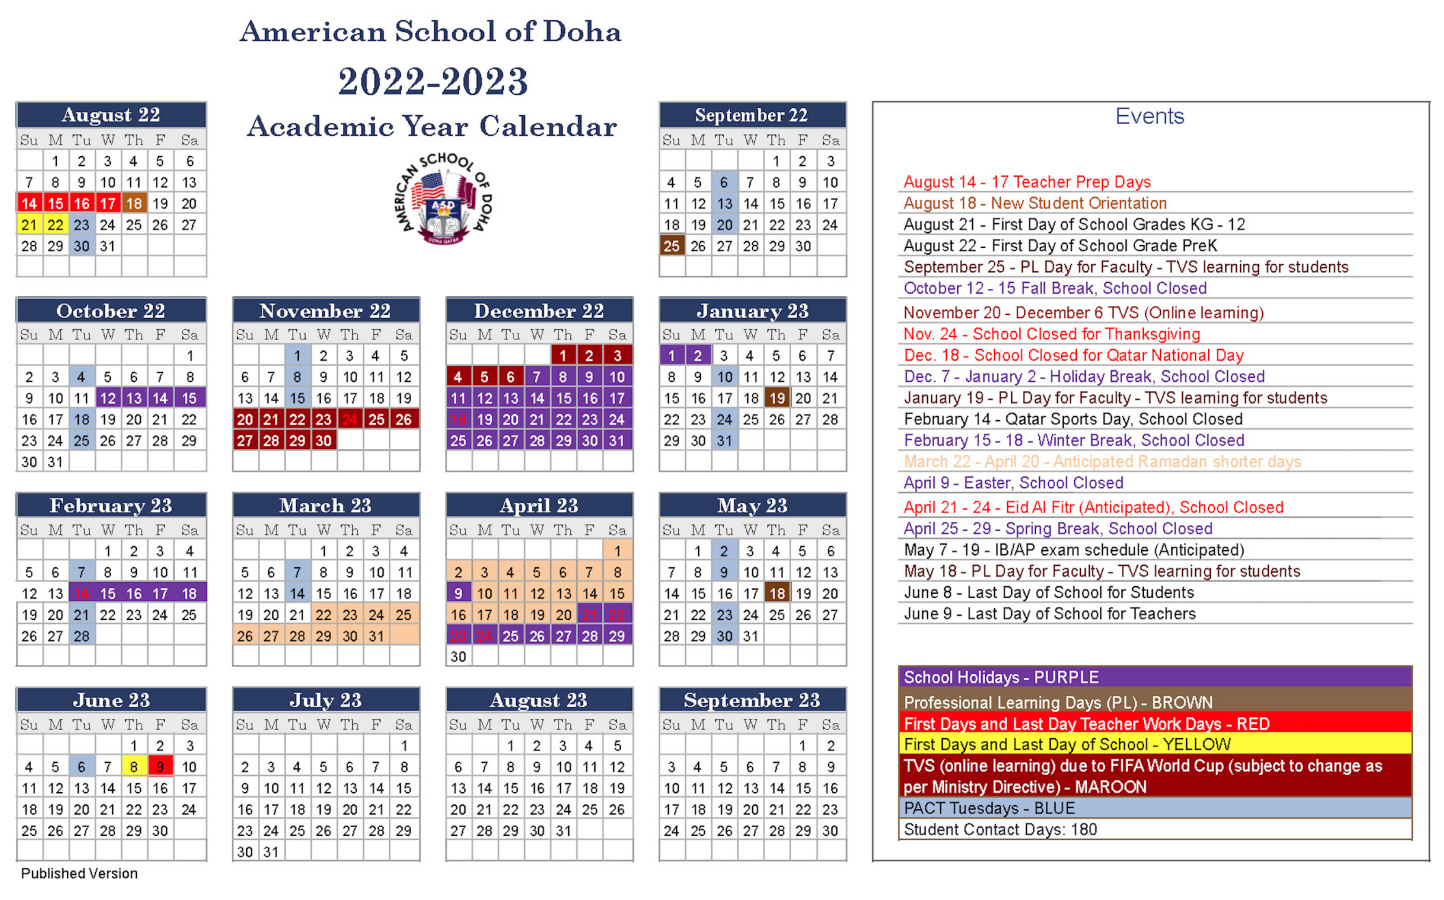 ASD Calendar Published Version American School of Doha